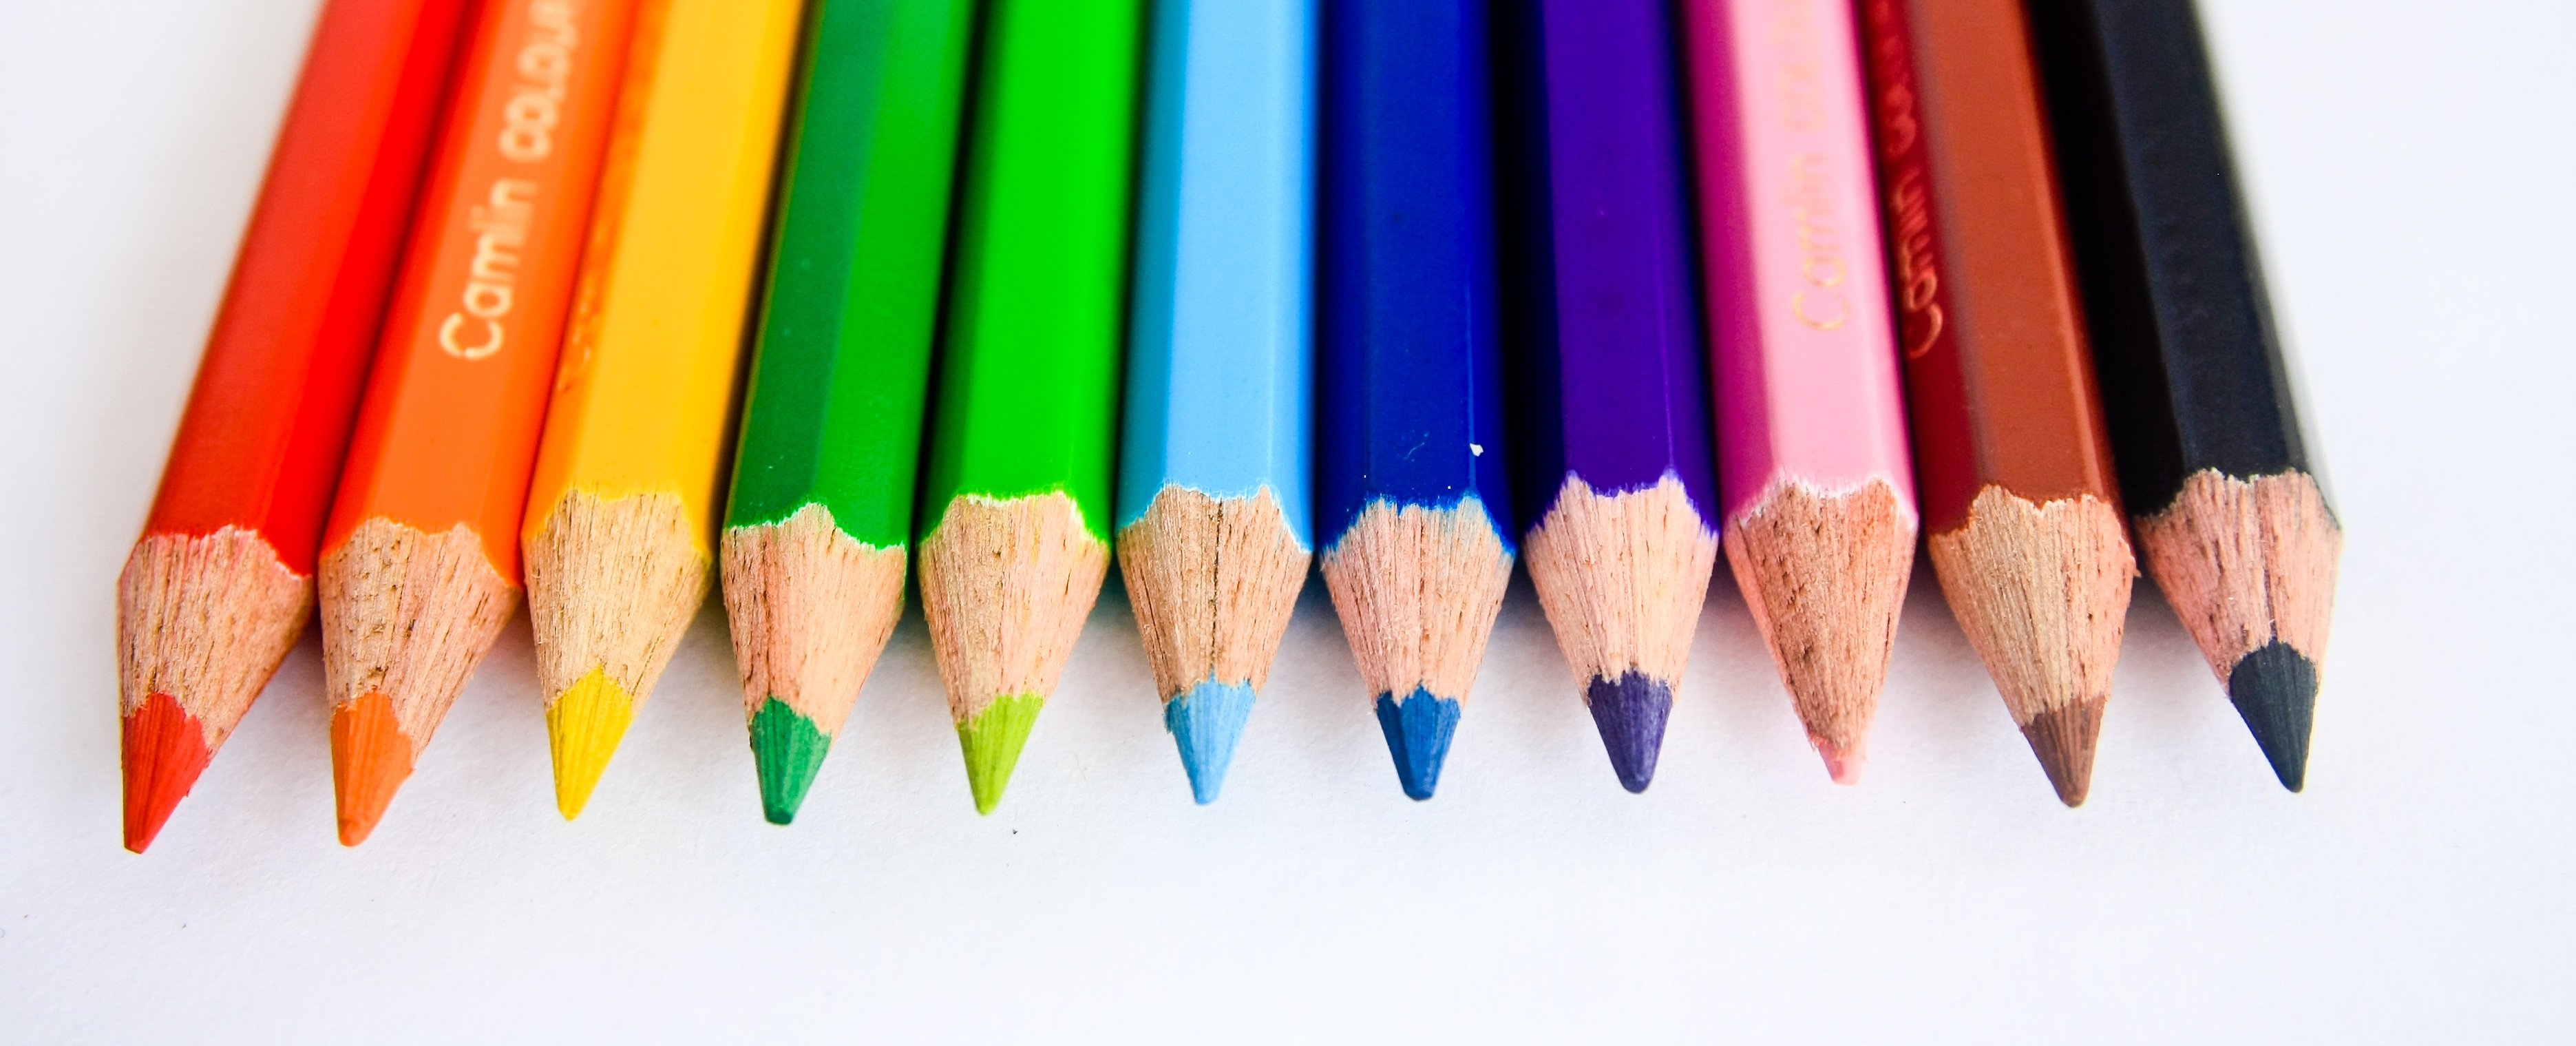 Pencil windows. Карандаши цветные. Цветные карандаши на белом фоне. Ручки и карандаши. Цветные карандаши на прозрачном фоне.